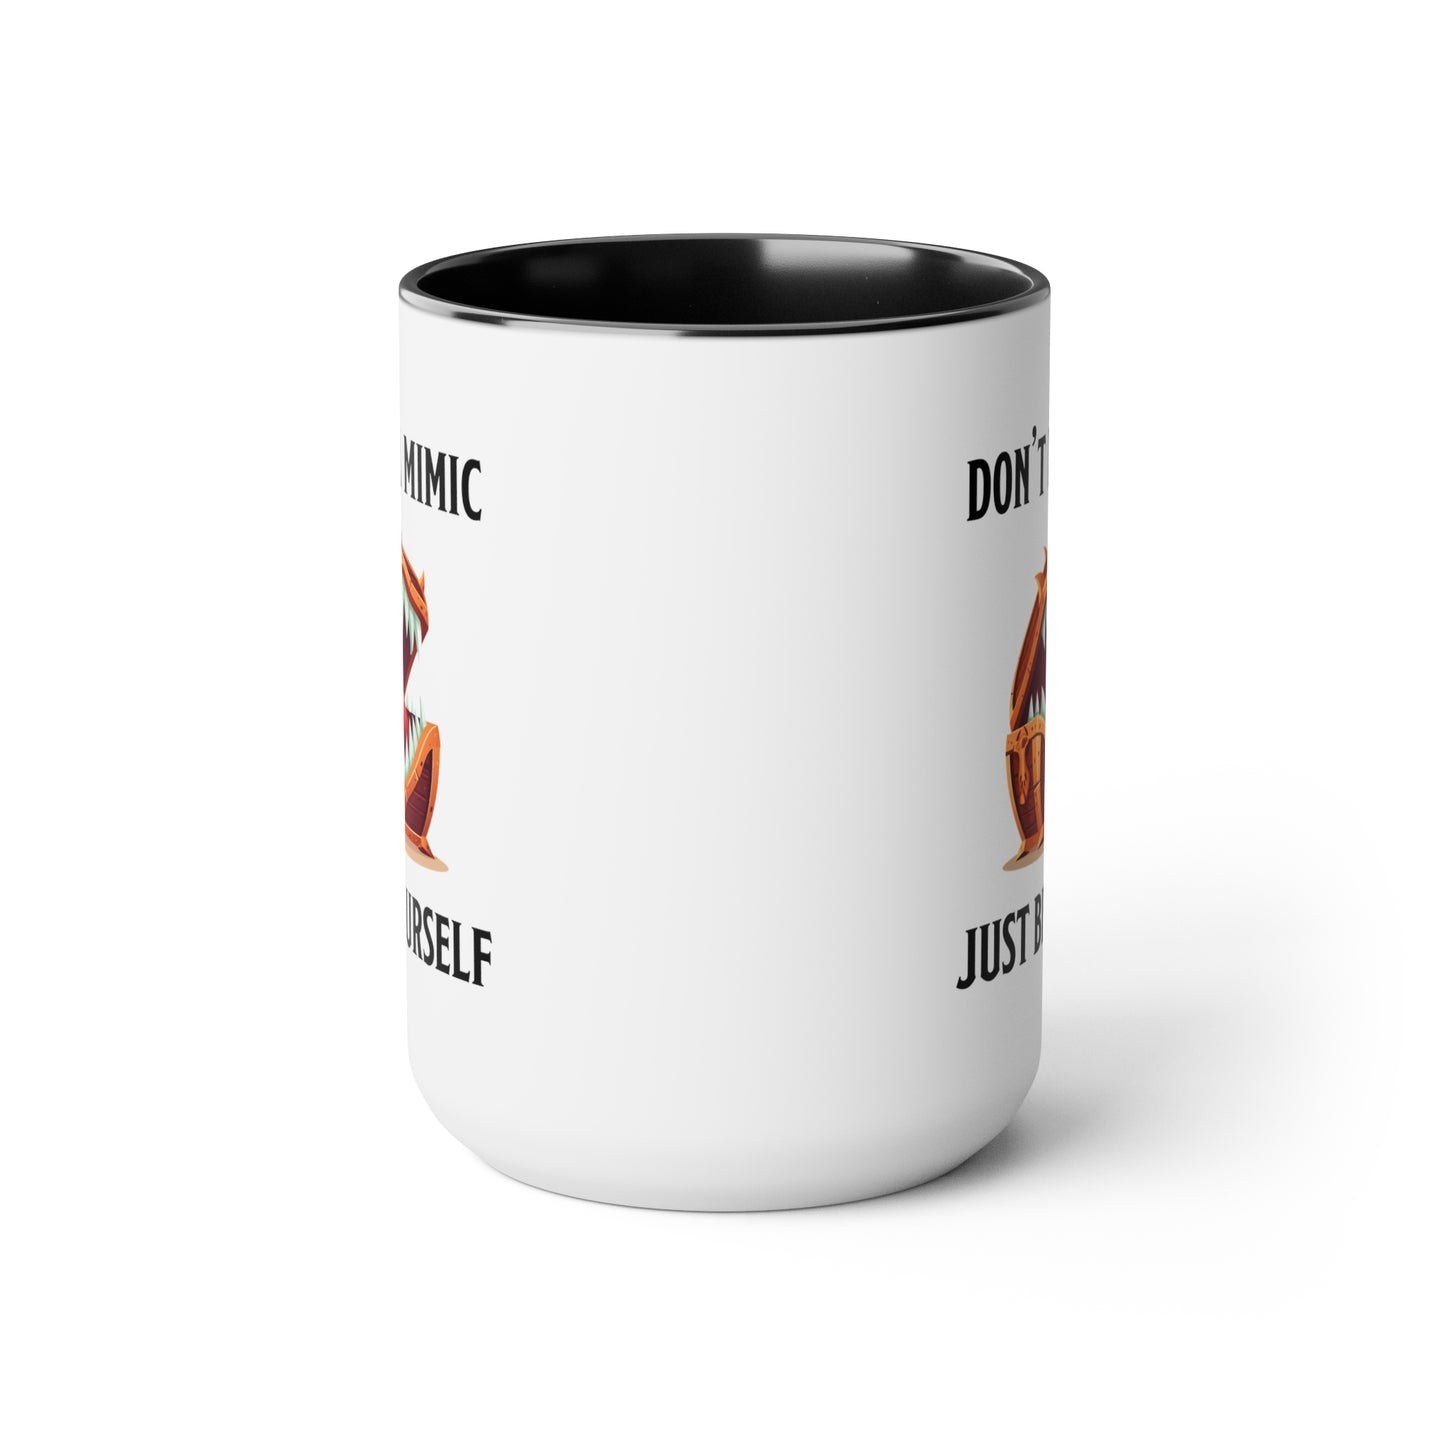 Don't Be A Mimic, Just Be Yourself Ceramic Mug 15oz, DnD Mug